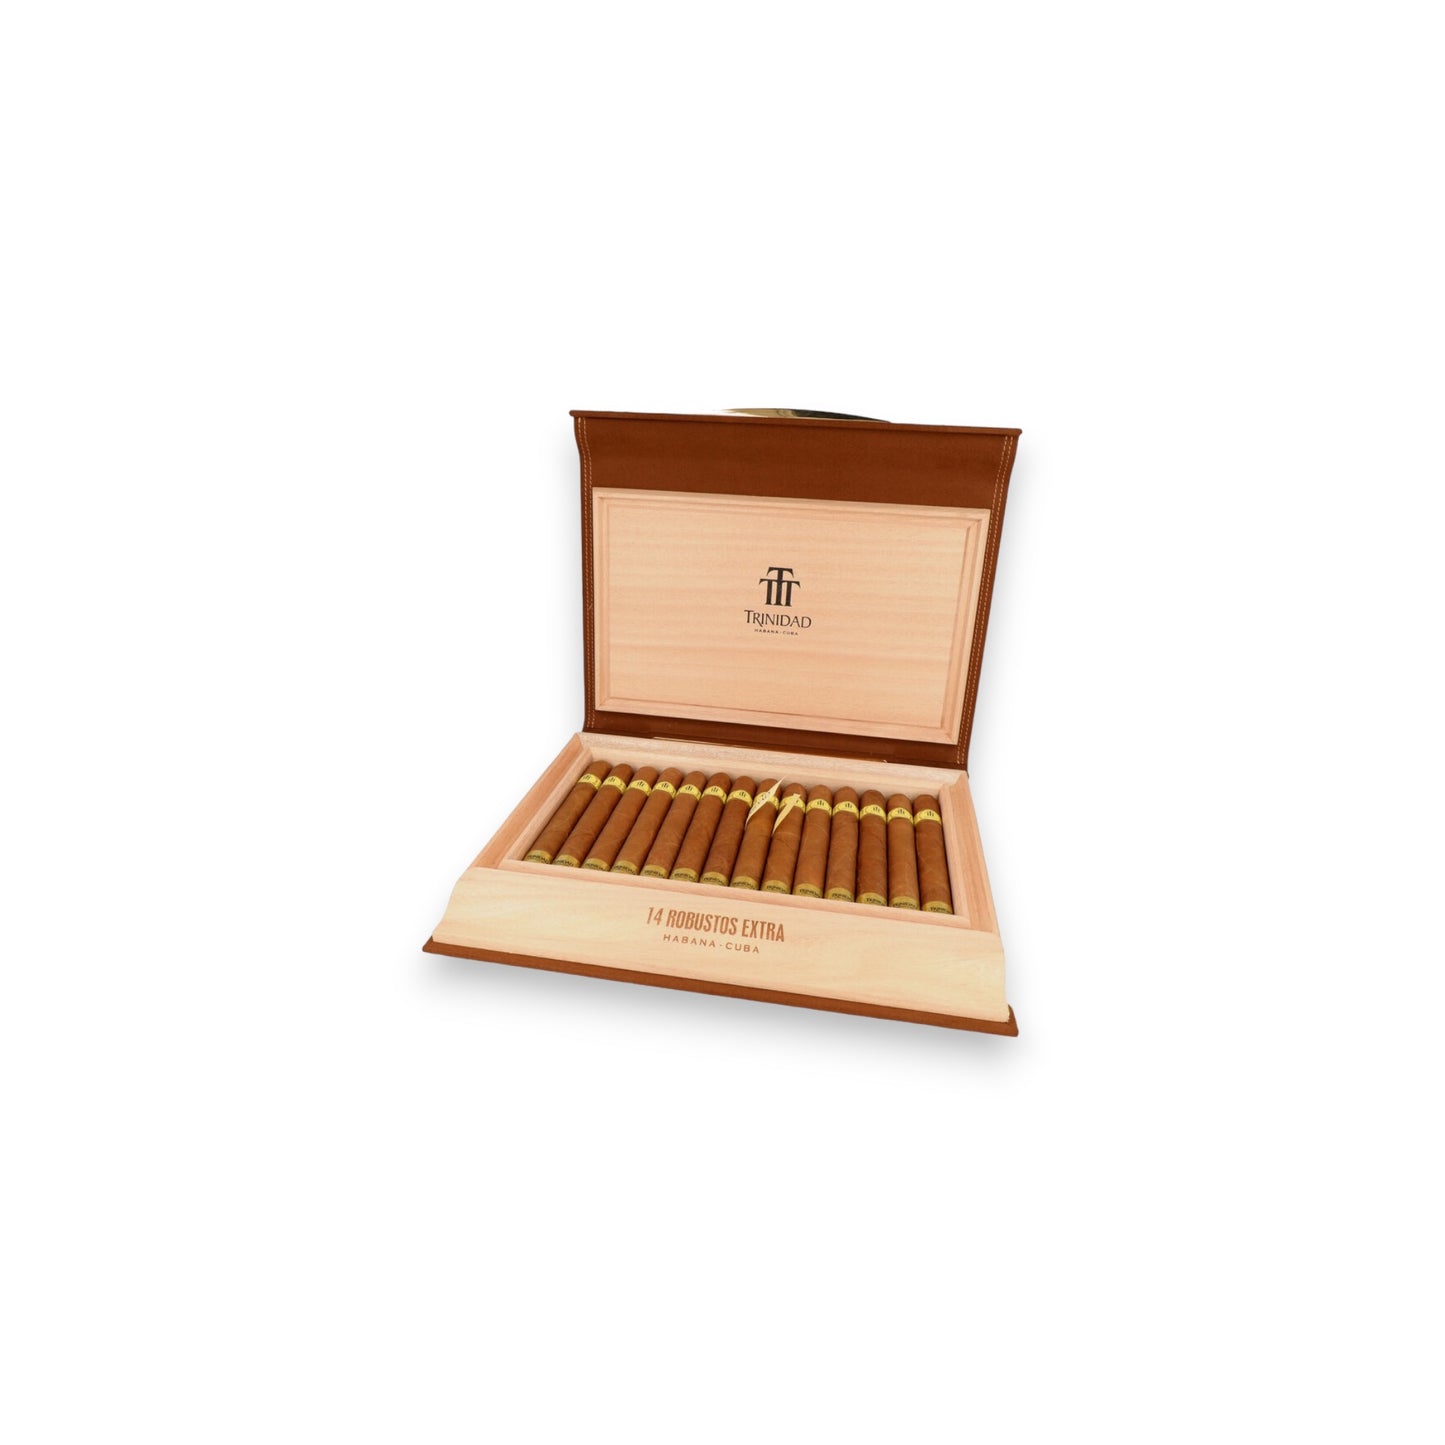 Trinidad Robusto Extra – Travel Humidor 14 Cigars